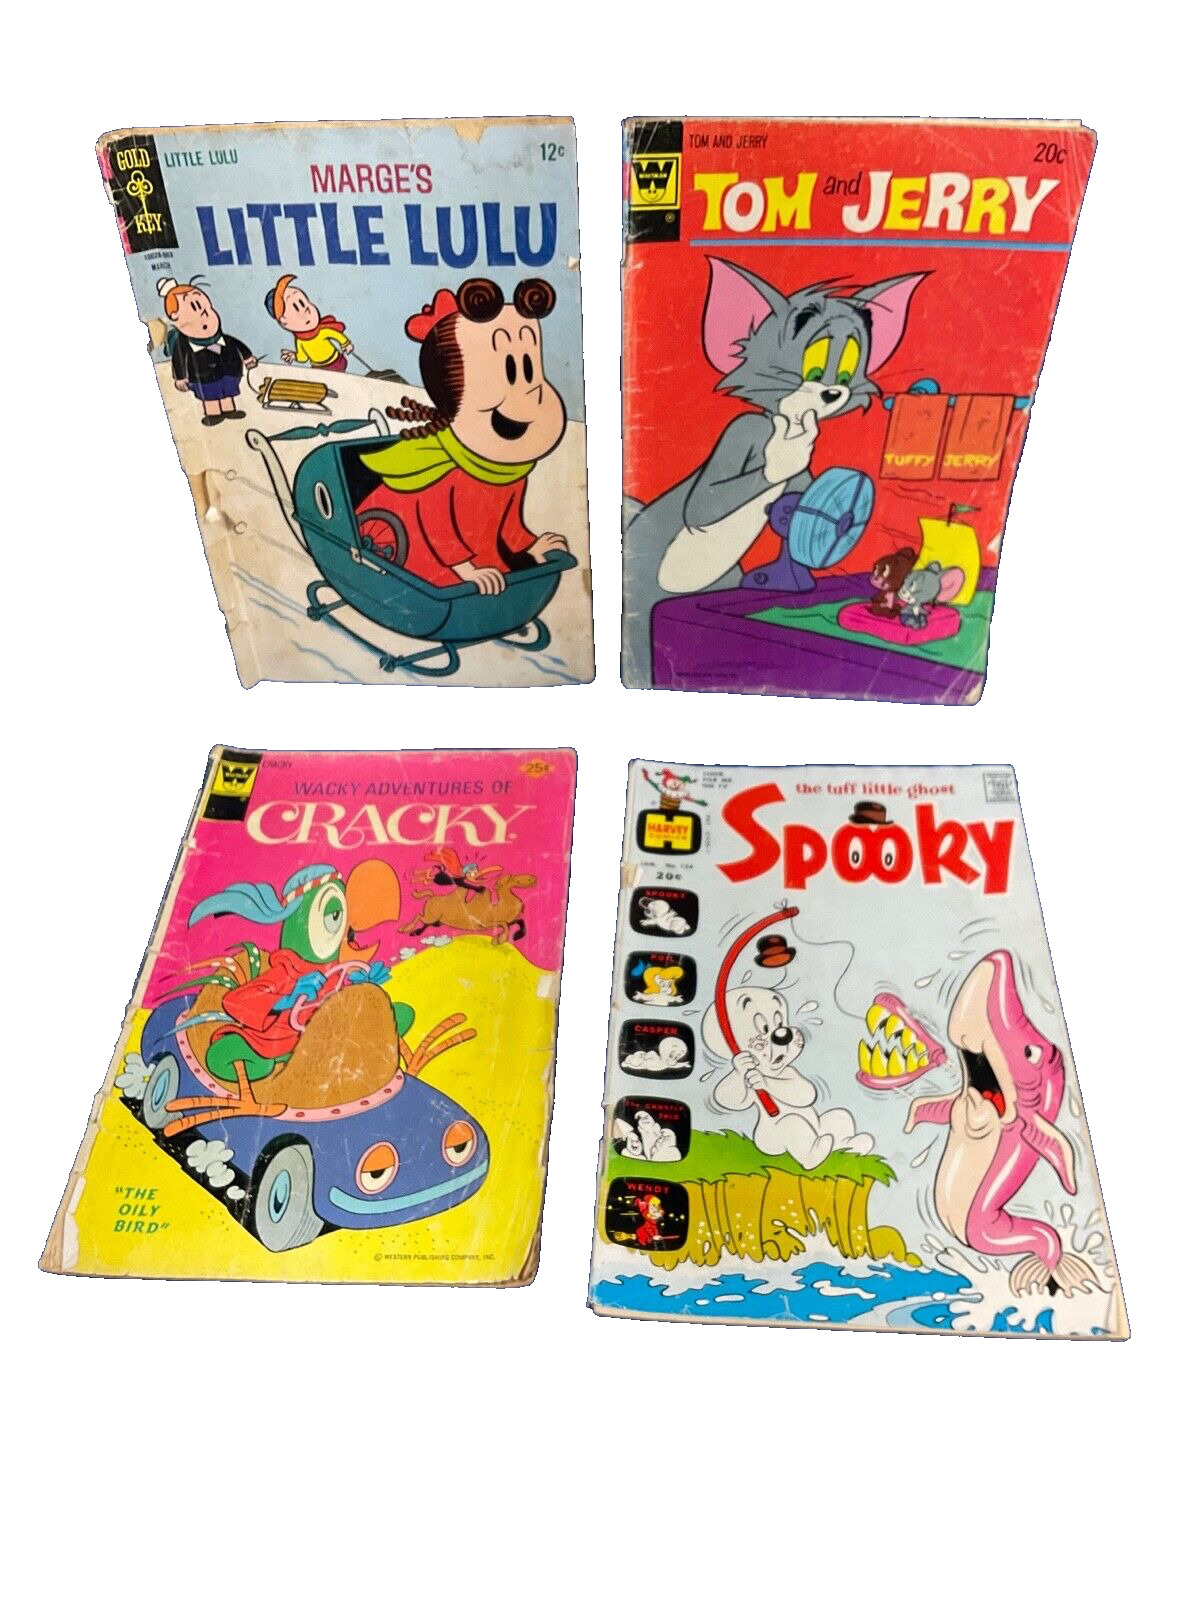 4-Comic Book Lot,1965 Little LuLu #175, 1974 Tom & Jerry #282, Cracky, & Spooky